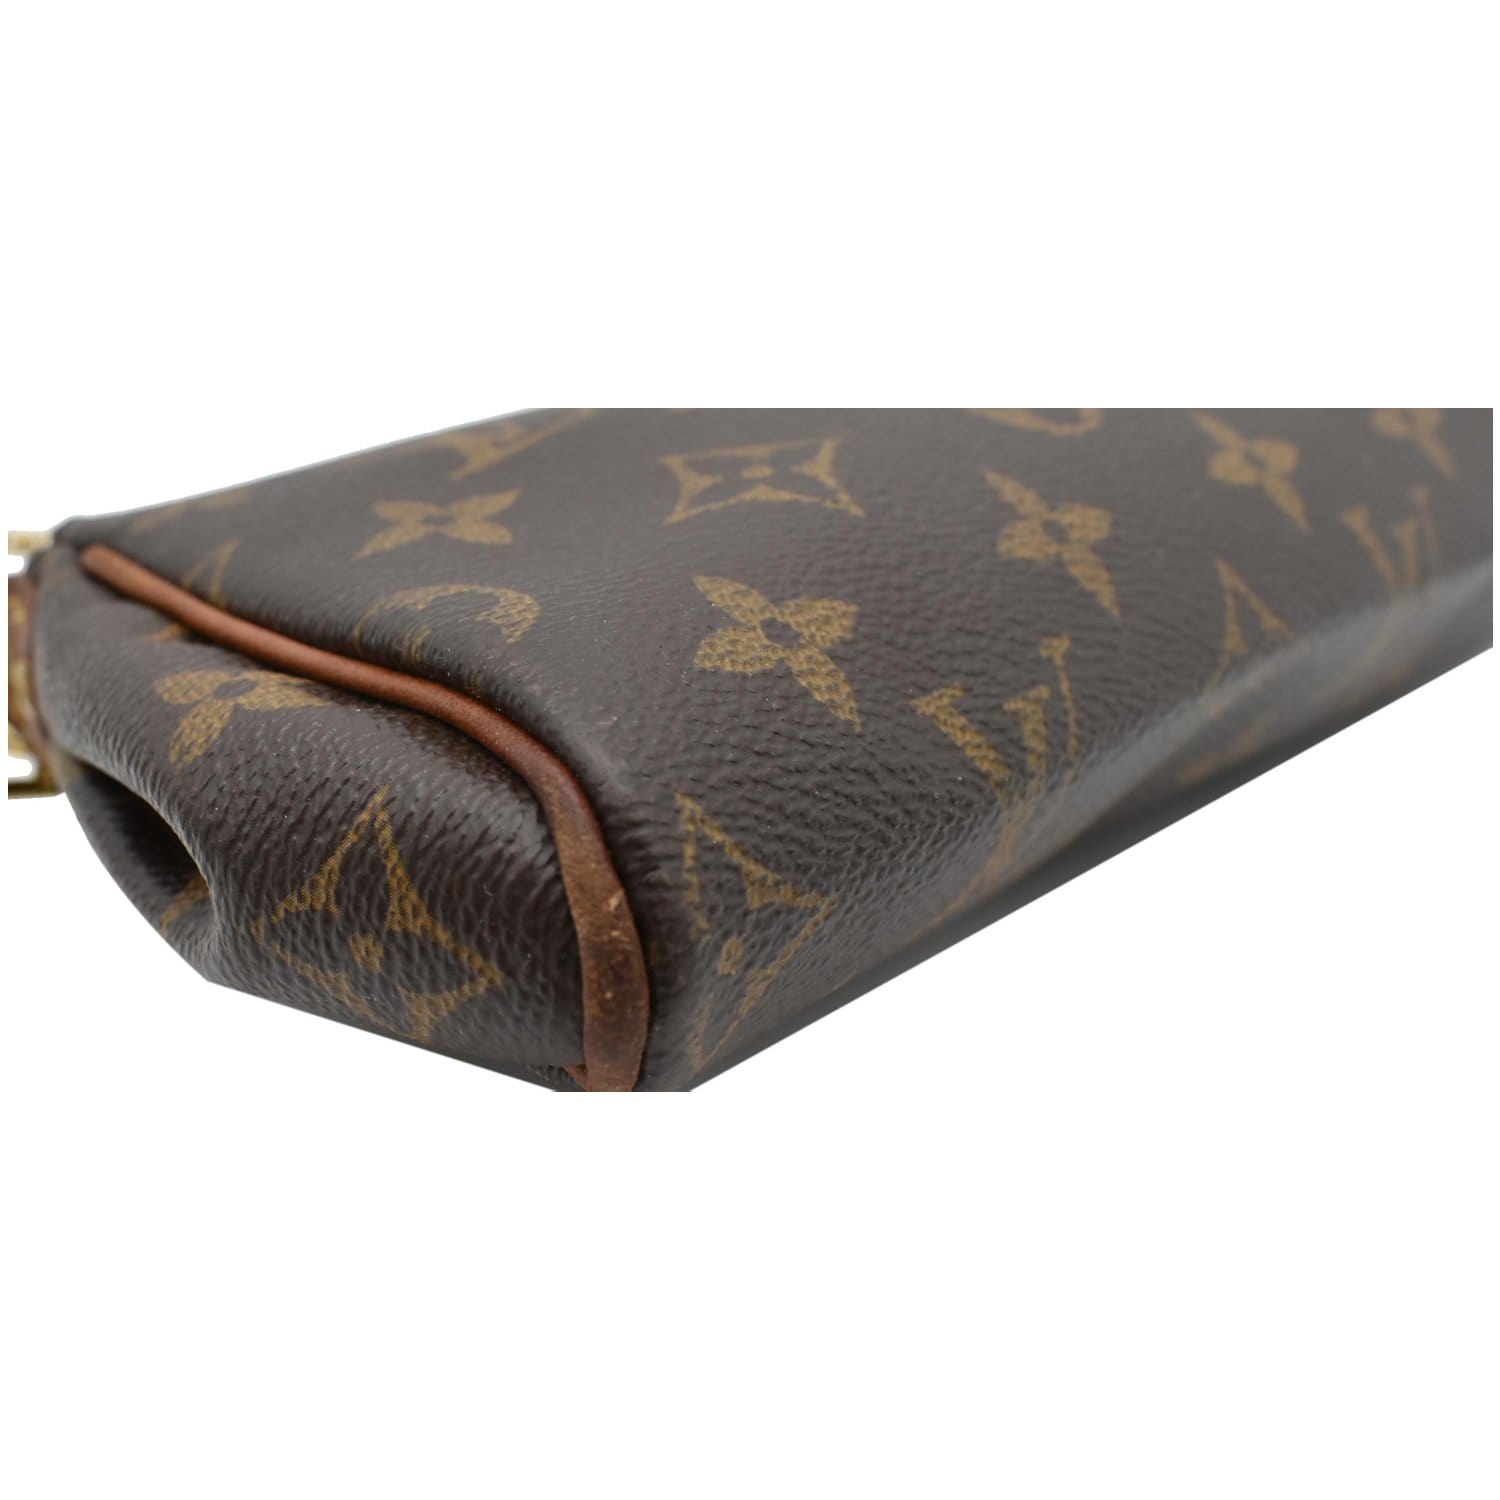 Eva leather handbag Louis Vuitton Brown in Leather - 36019240